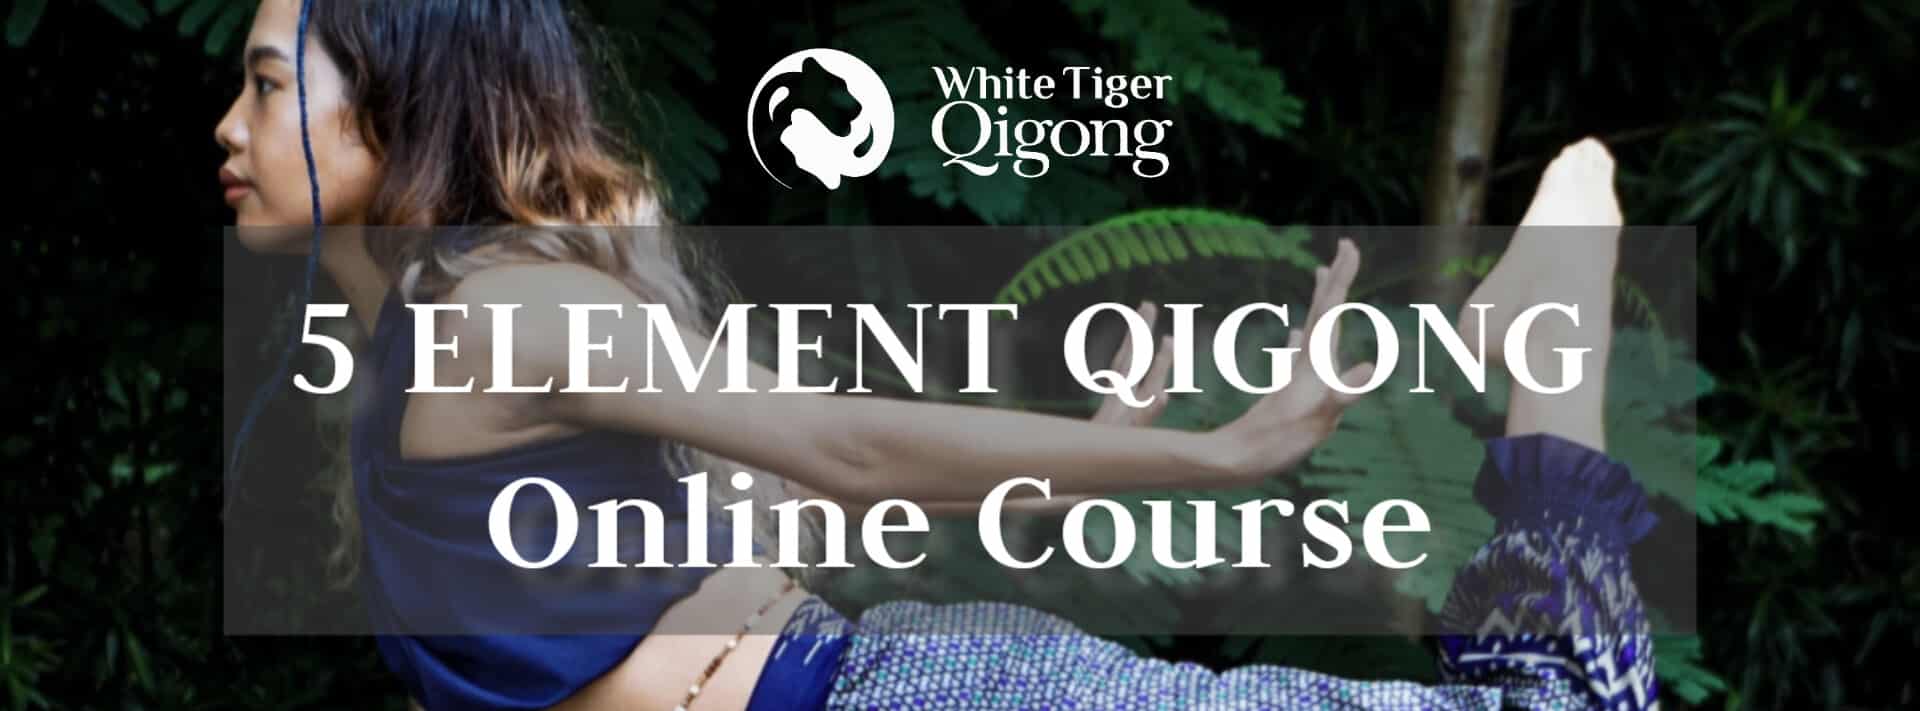 5  Element Qigong Online Course Poster